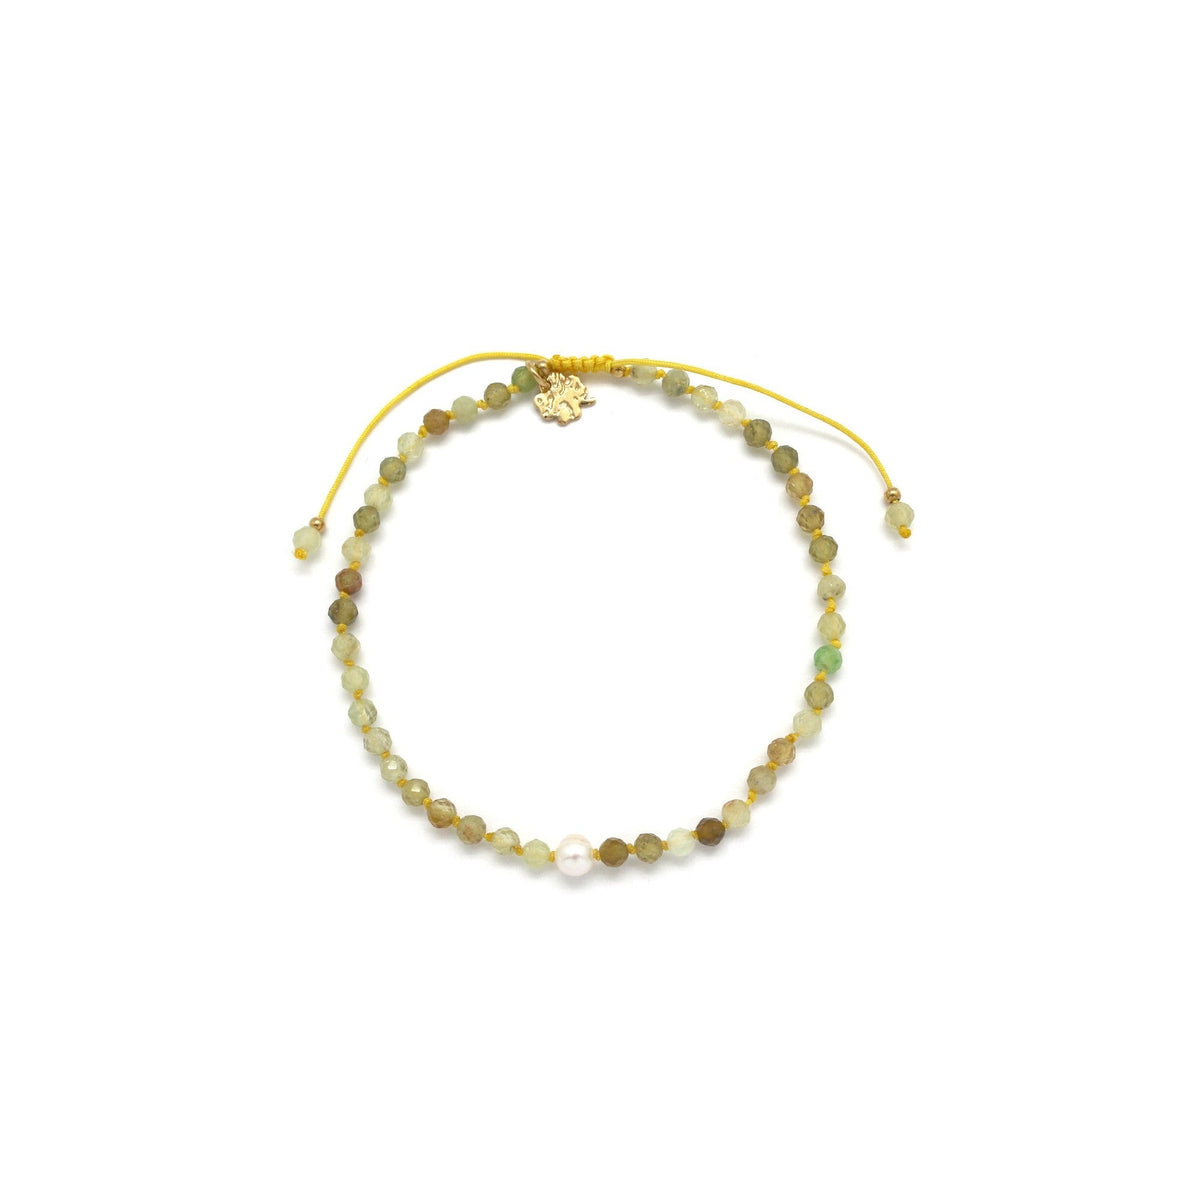 Adjustable peridot bracelet with water pearl